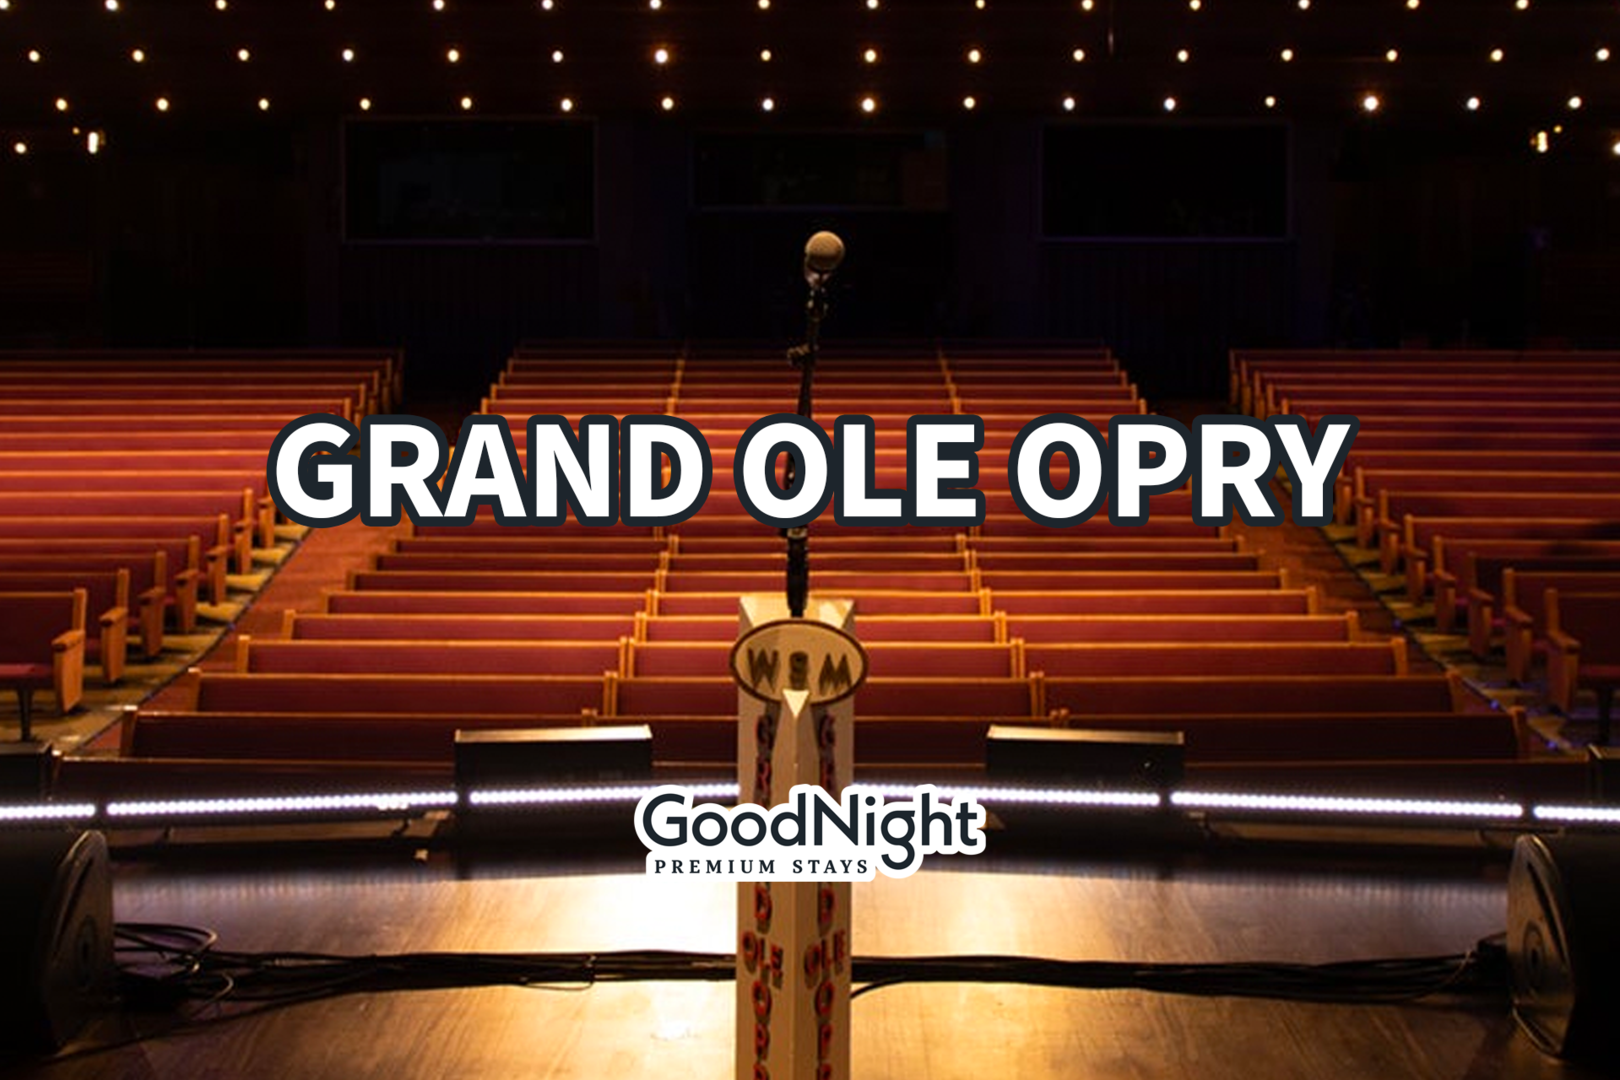 16 mins: Grand Ole Opry